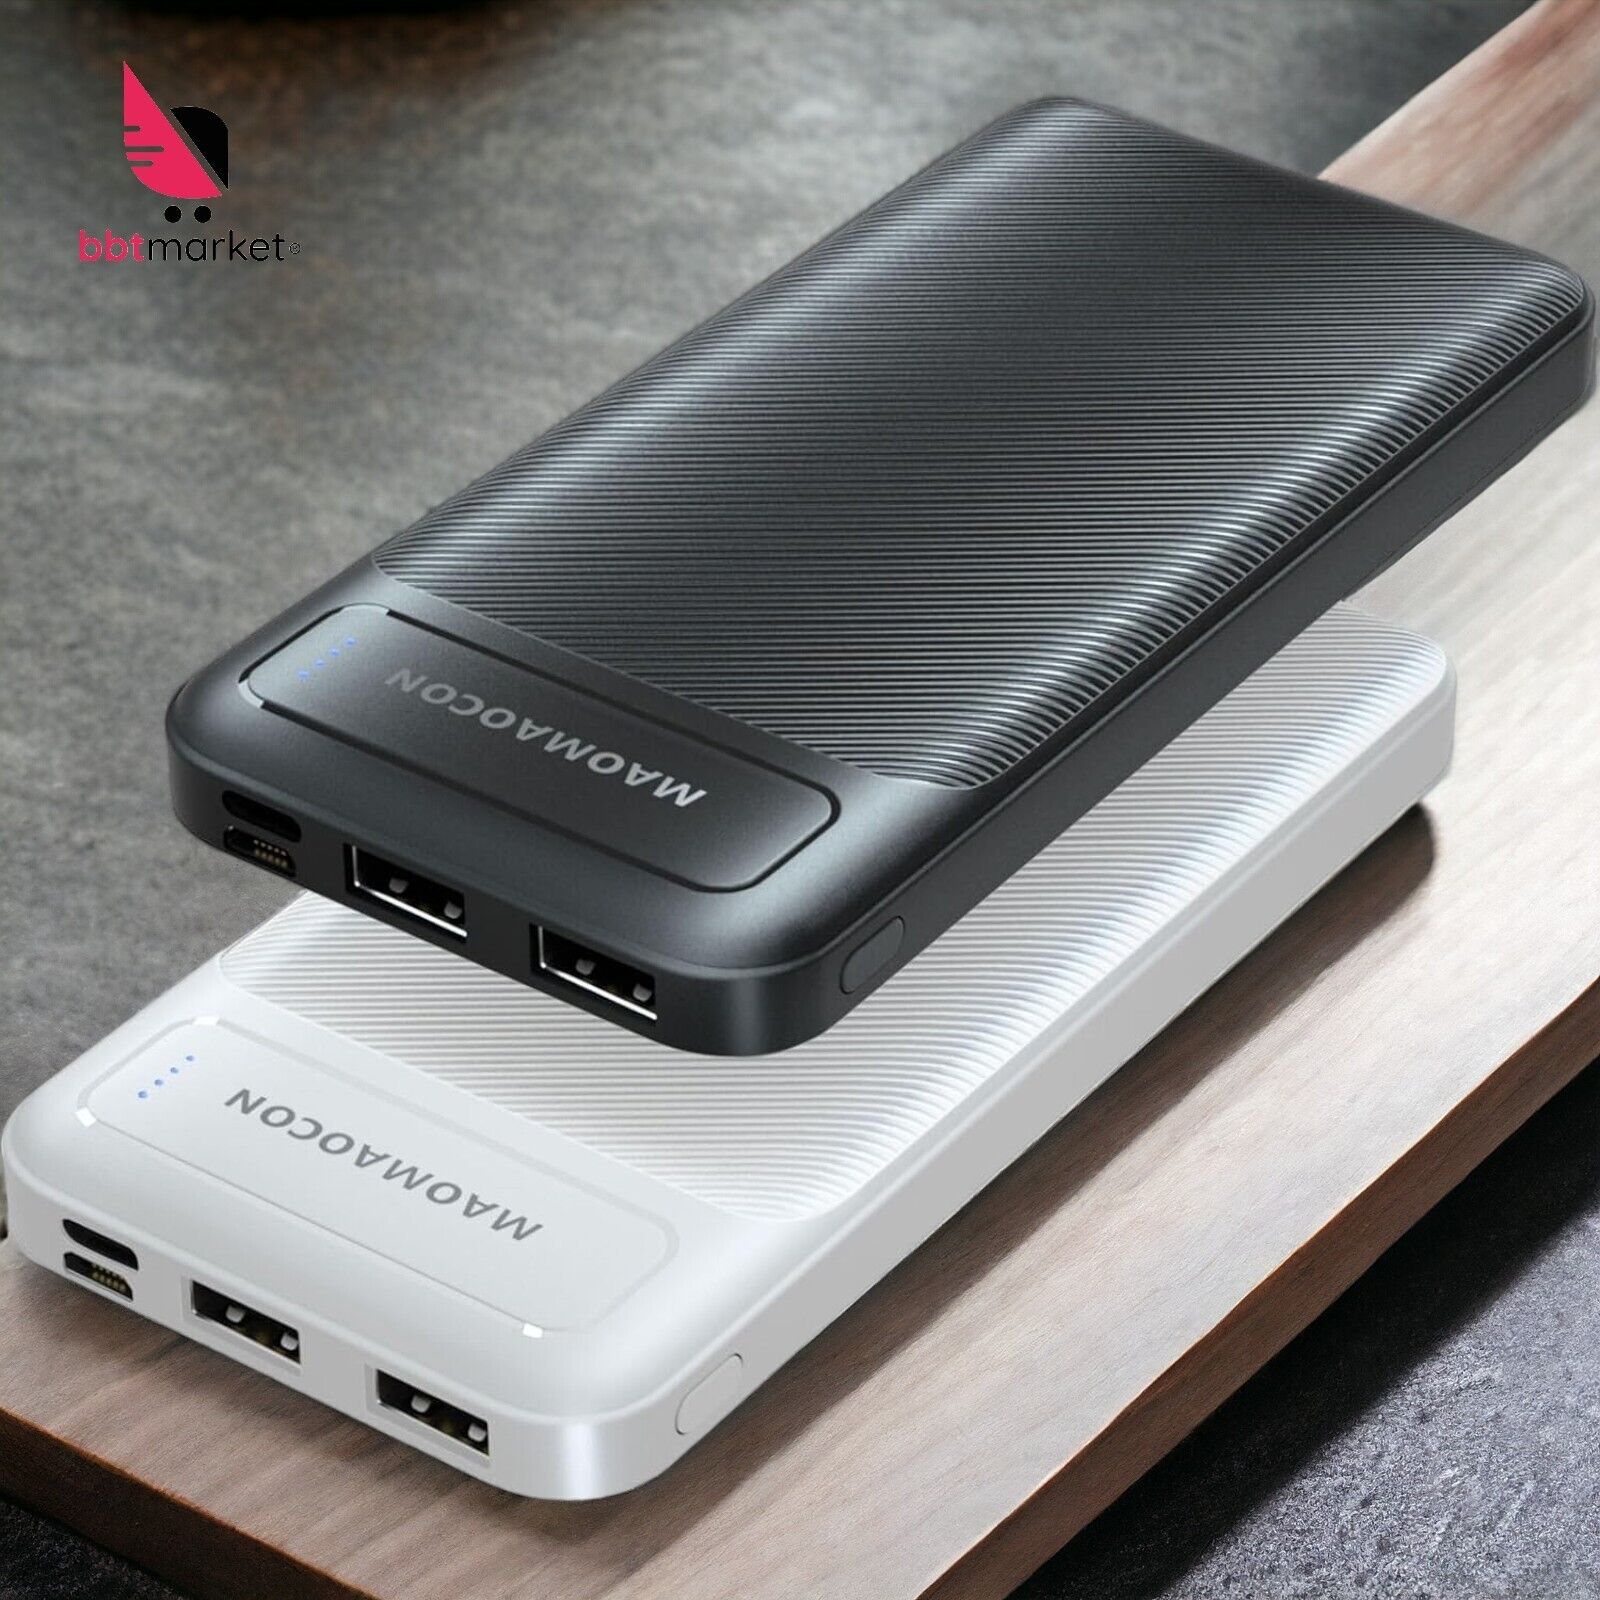 Powerbank (2 Stück), 10600mAh, USB C, 3 Ports Anschlüsse, z.B. für Smartphones